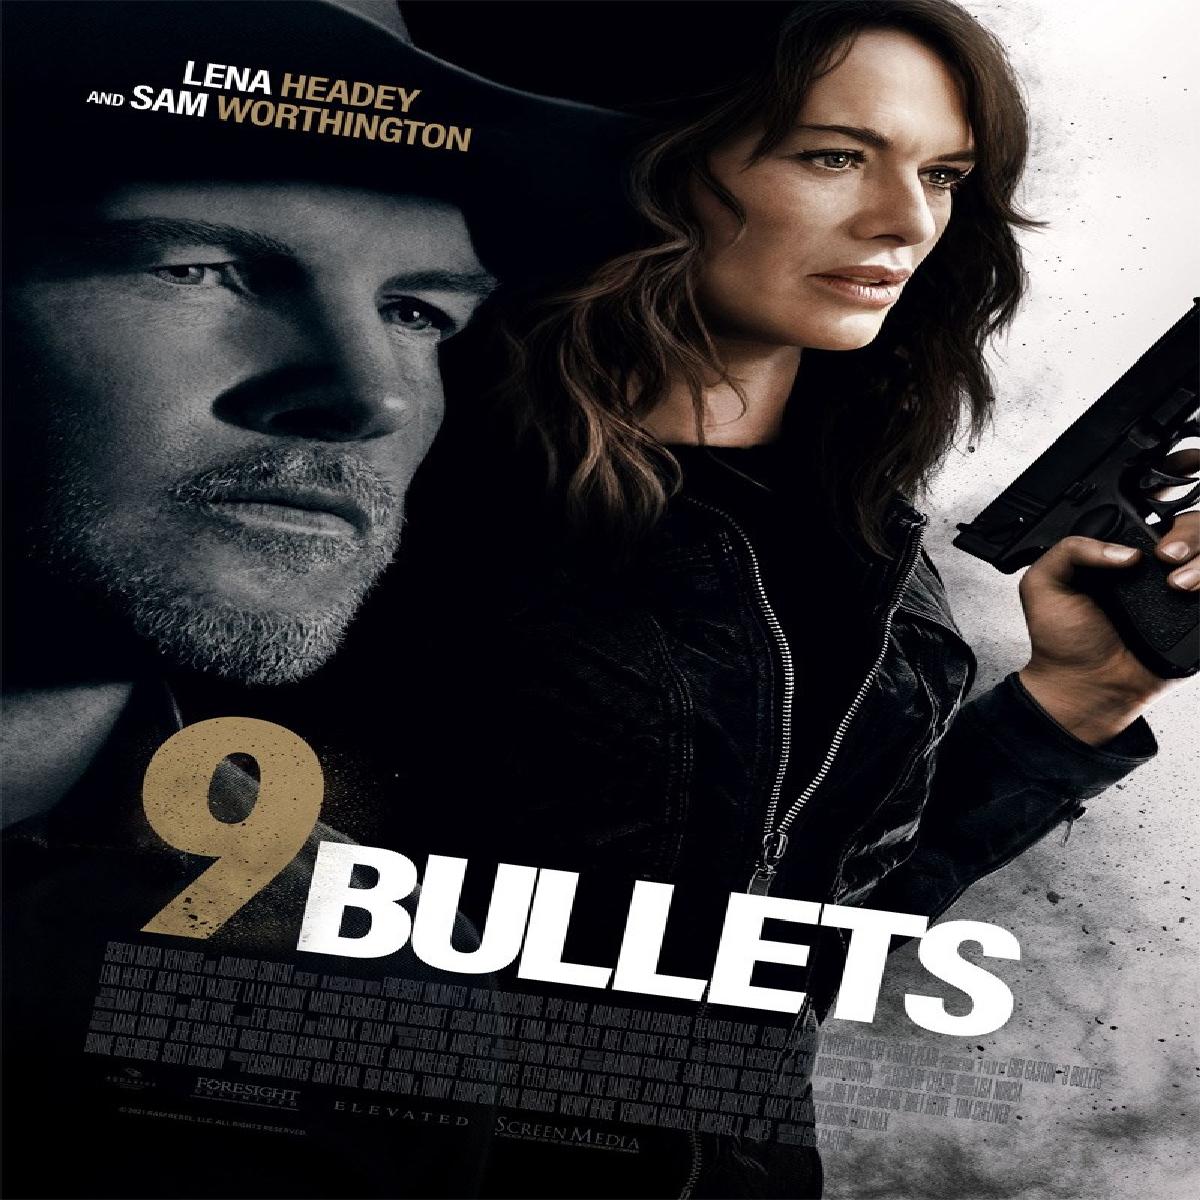 9 Bullets Trailer Is Out, Starring Lena Headey And Sam Worthington